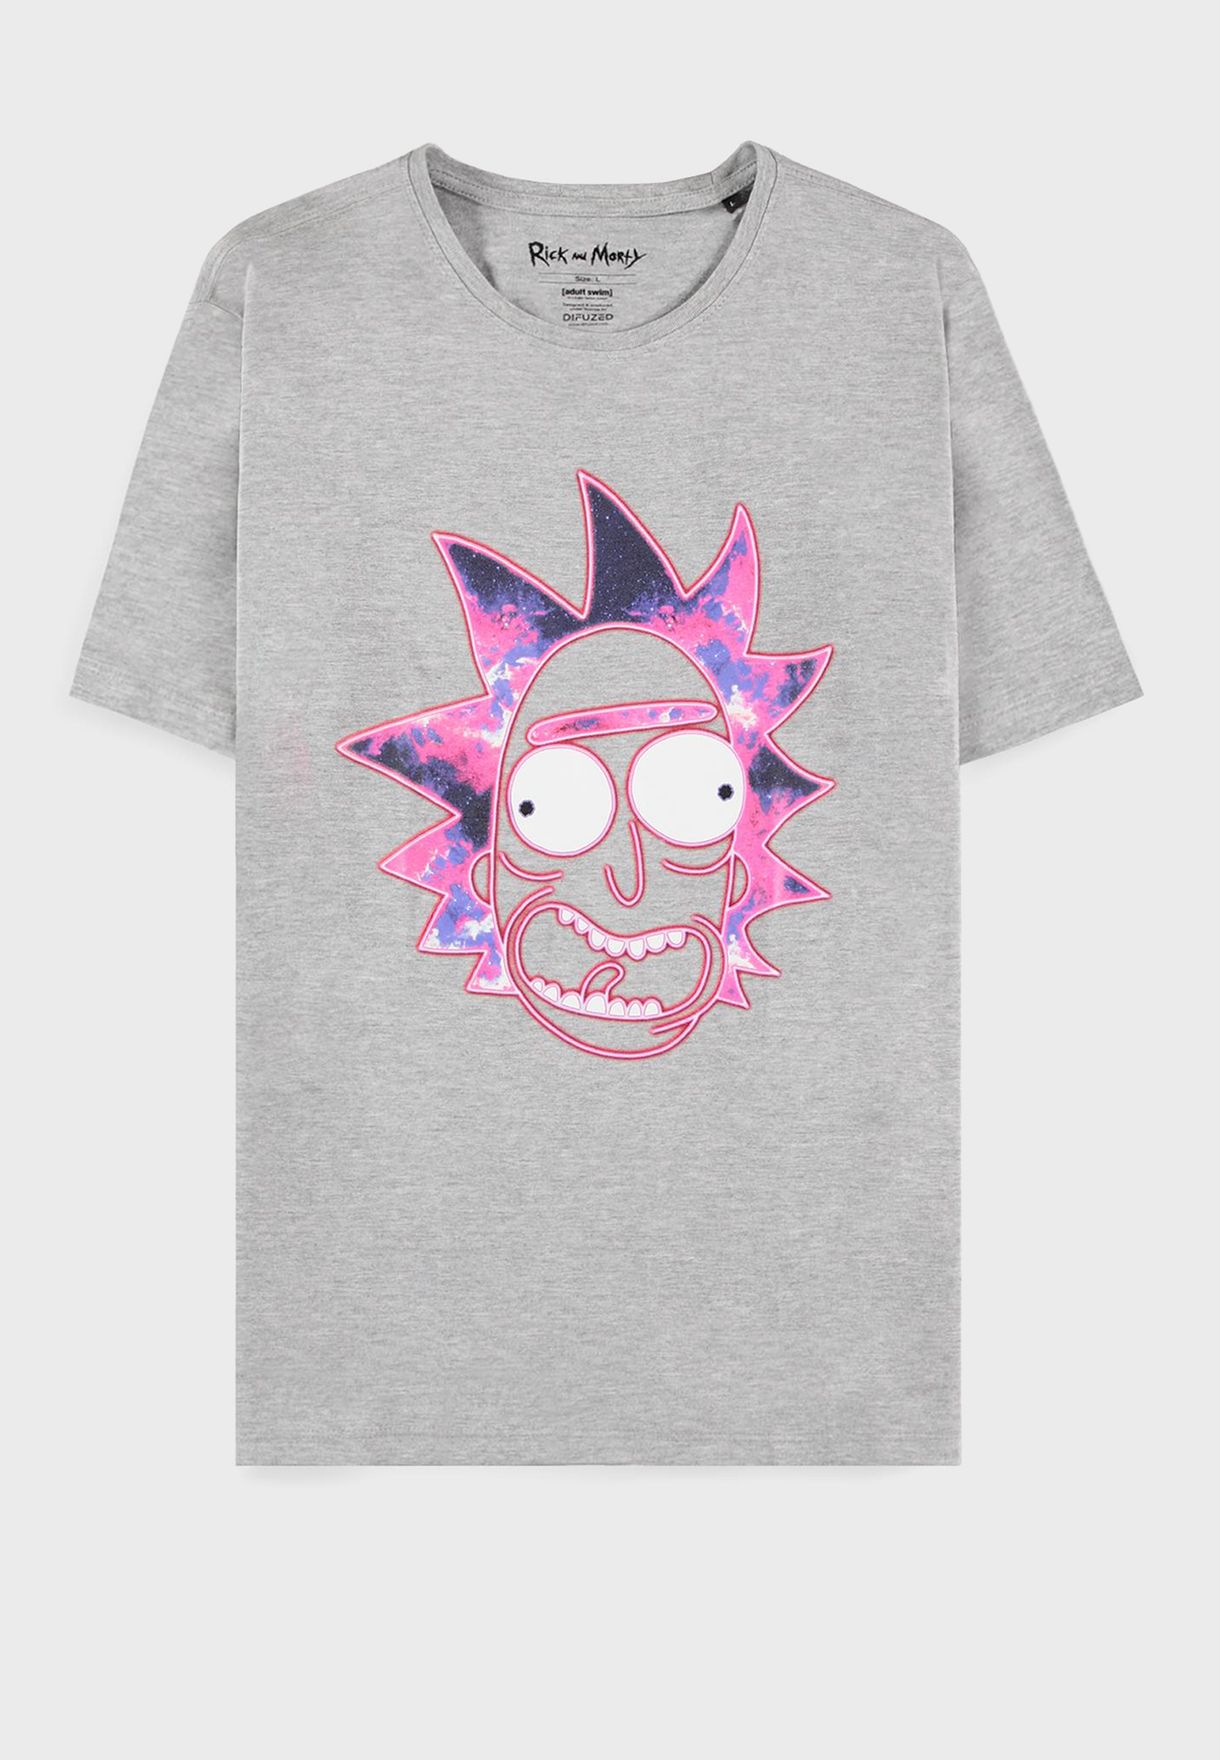 Rick & Morty Crew Neck T-Shirt